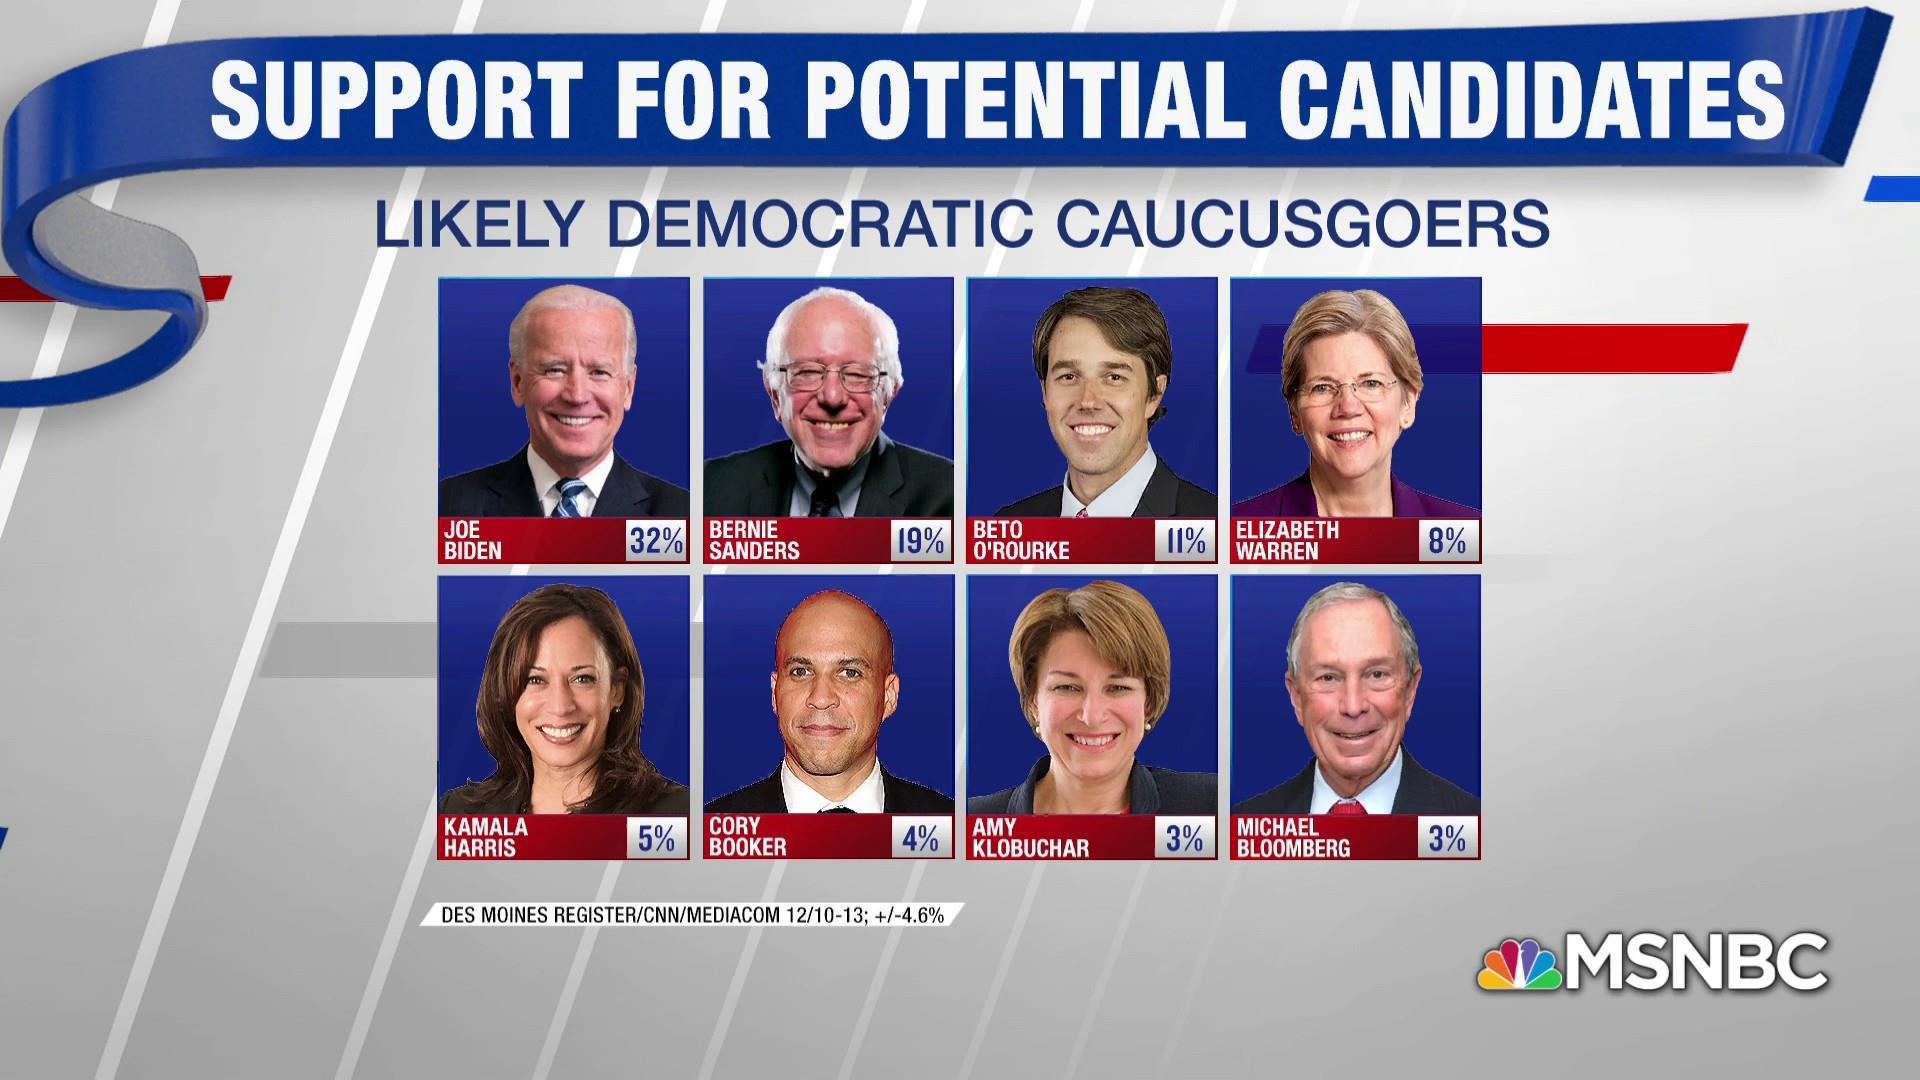 New 2020 poll of Iowans has Joe Biden leading the pack